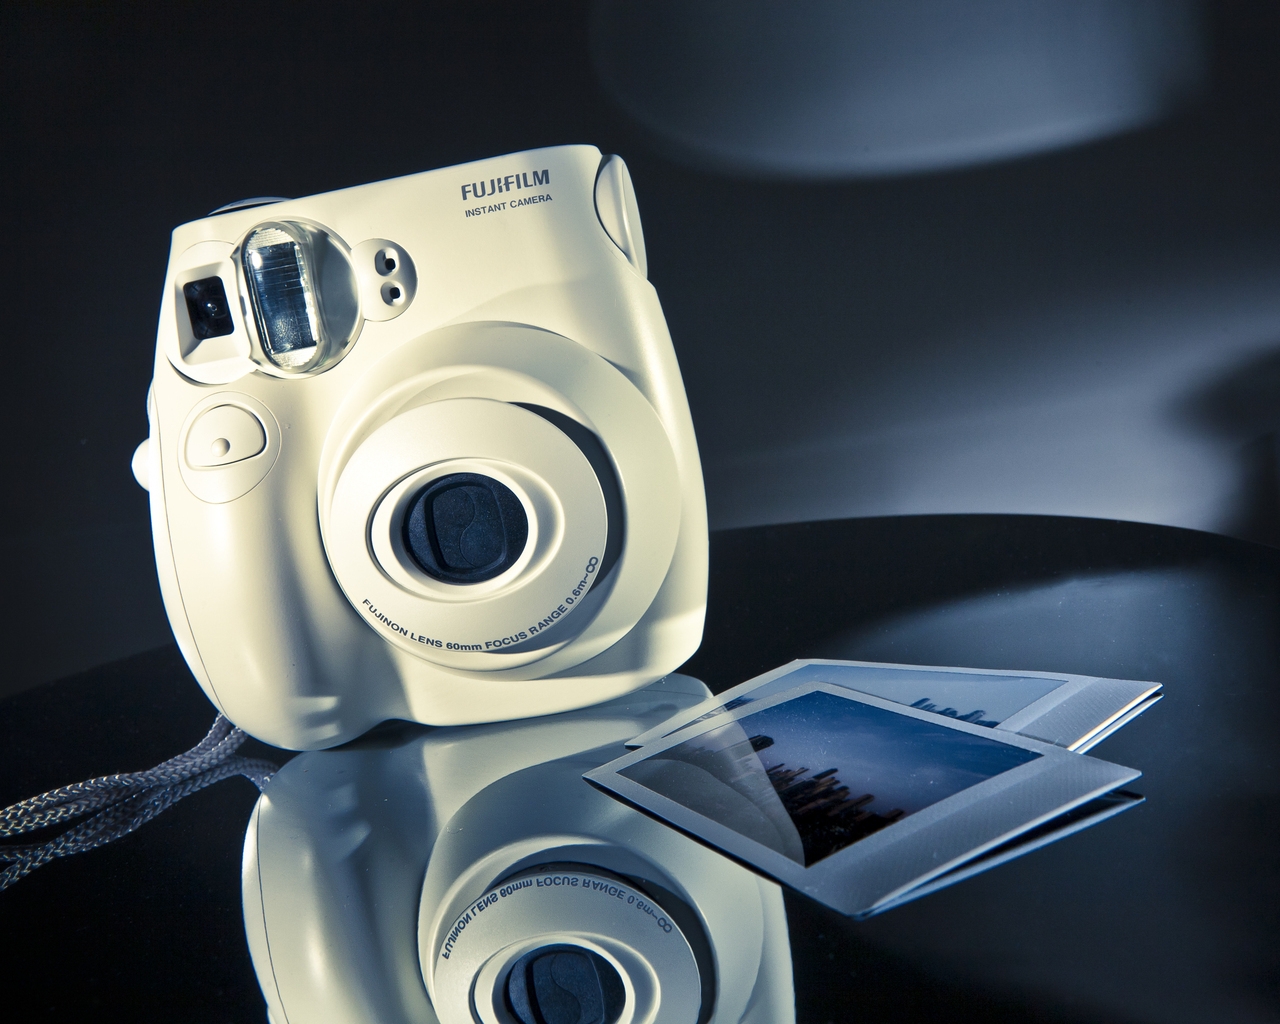 Fujifilm Instax Mini Camera for 1280 x 1024 resolution